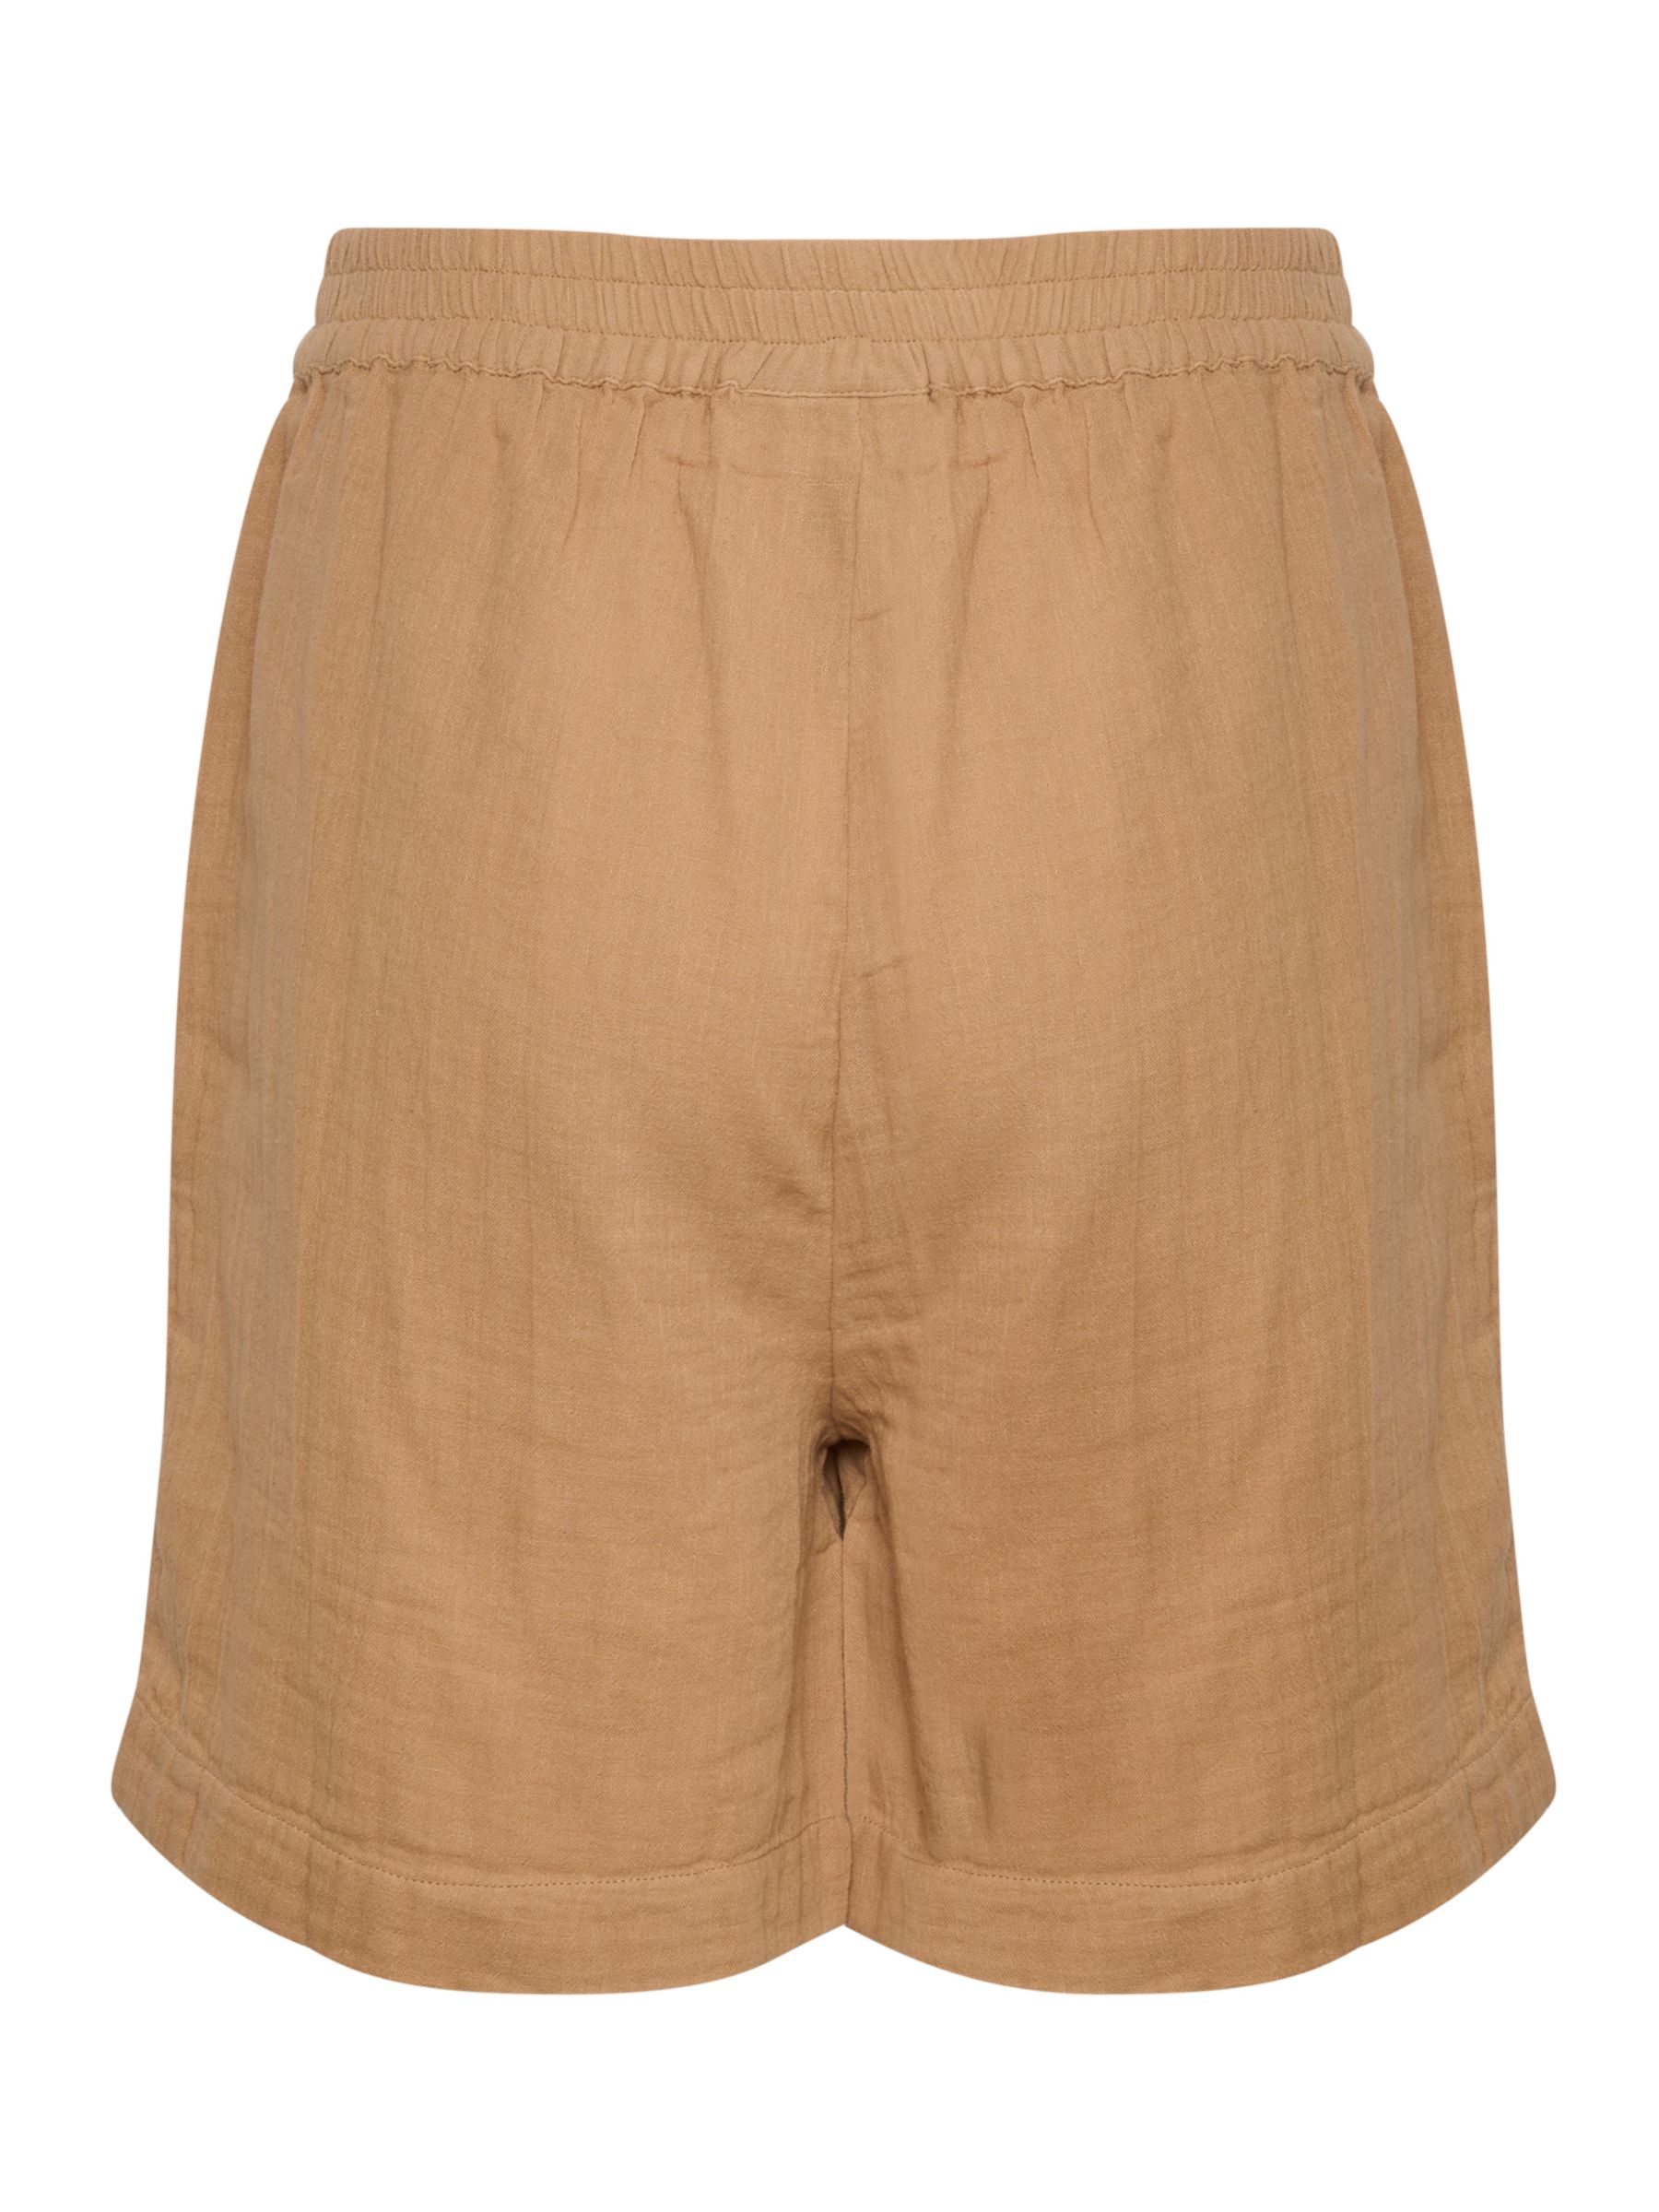 Saint Tropez Urika Elastic Waist Shorts, Brown, XS